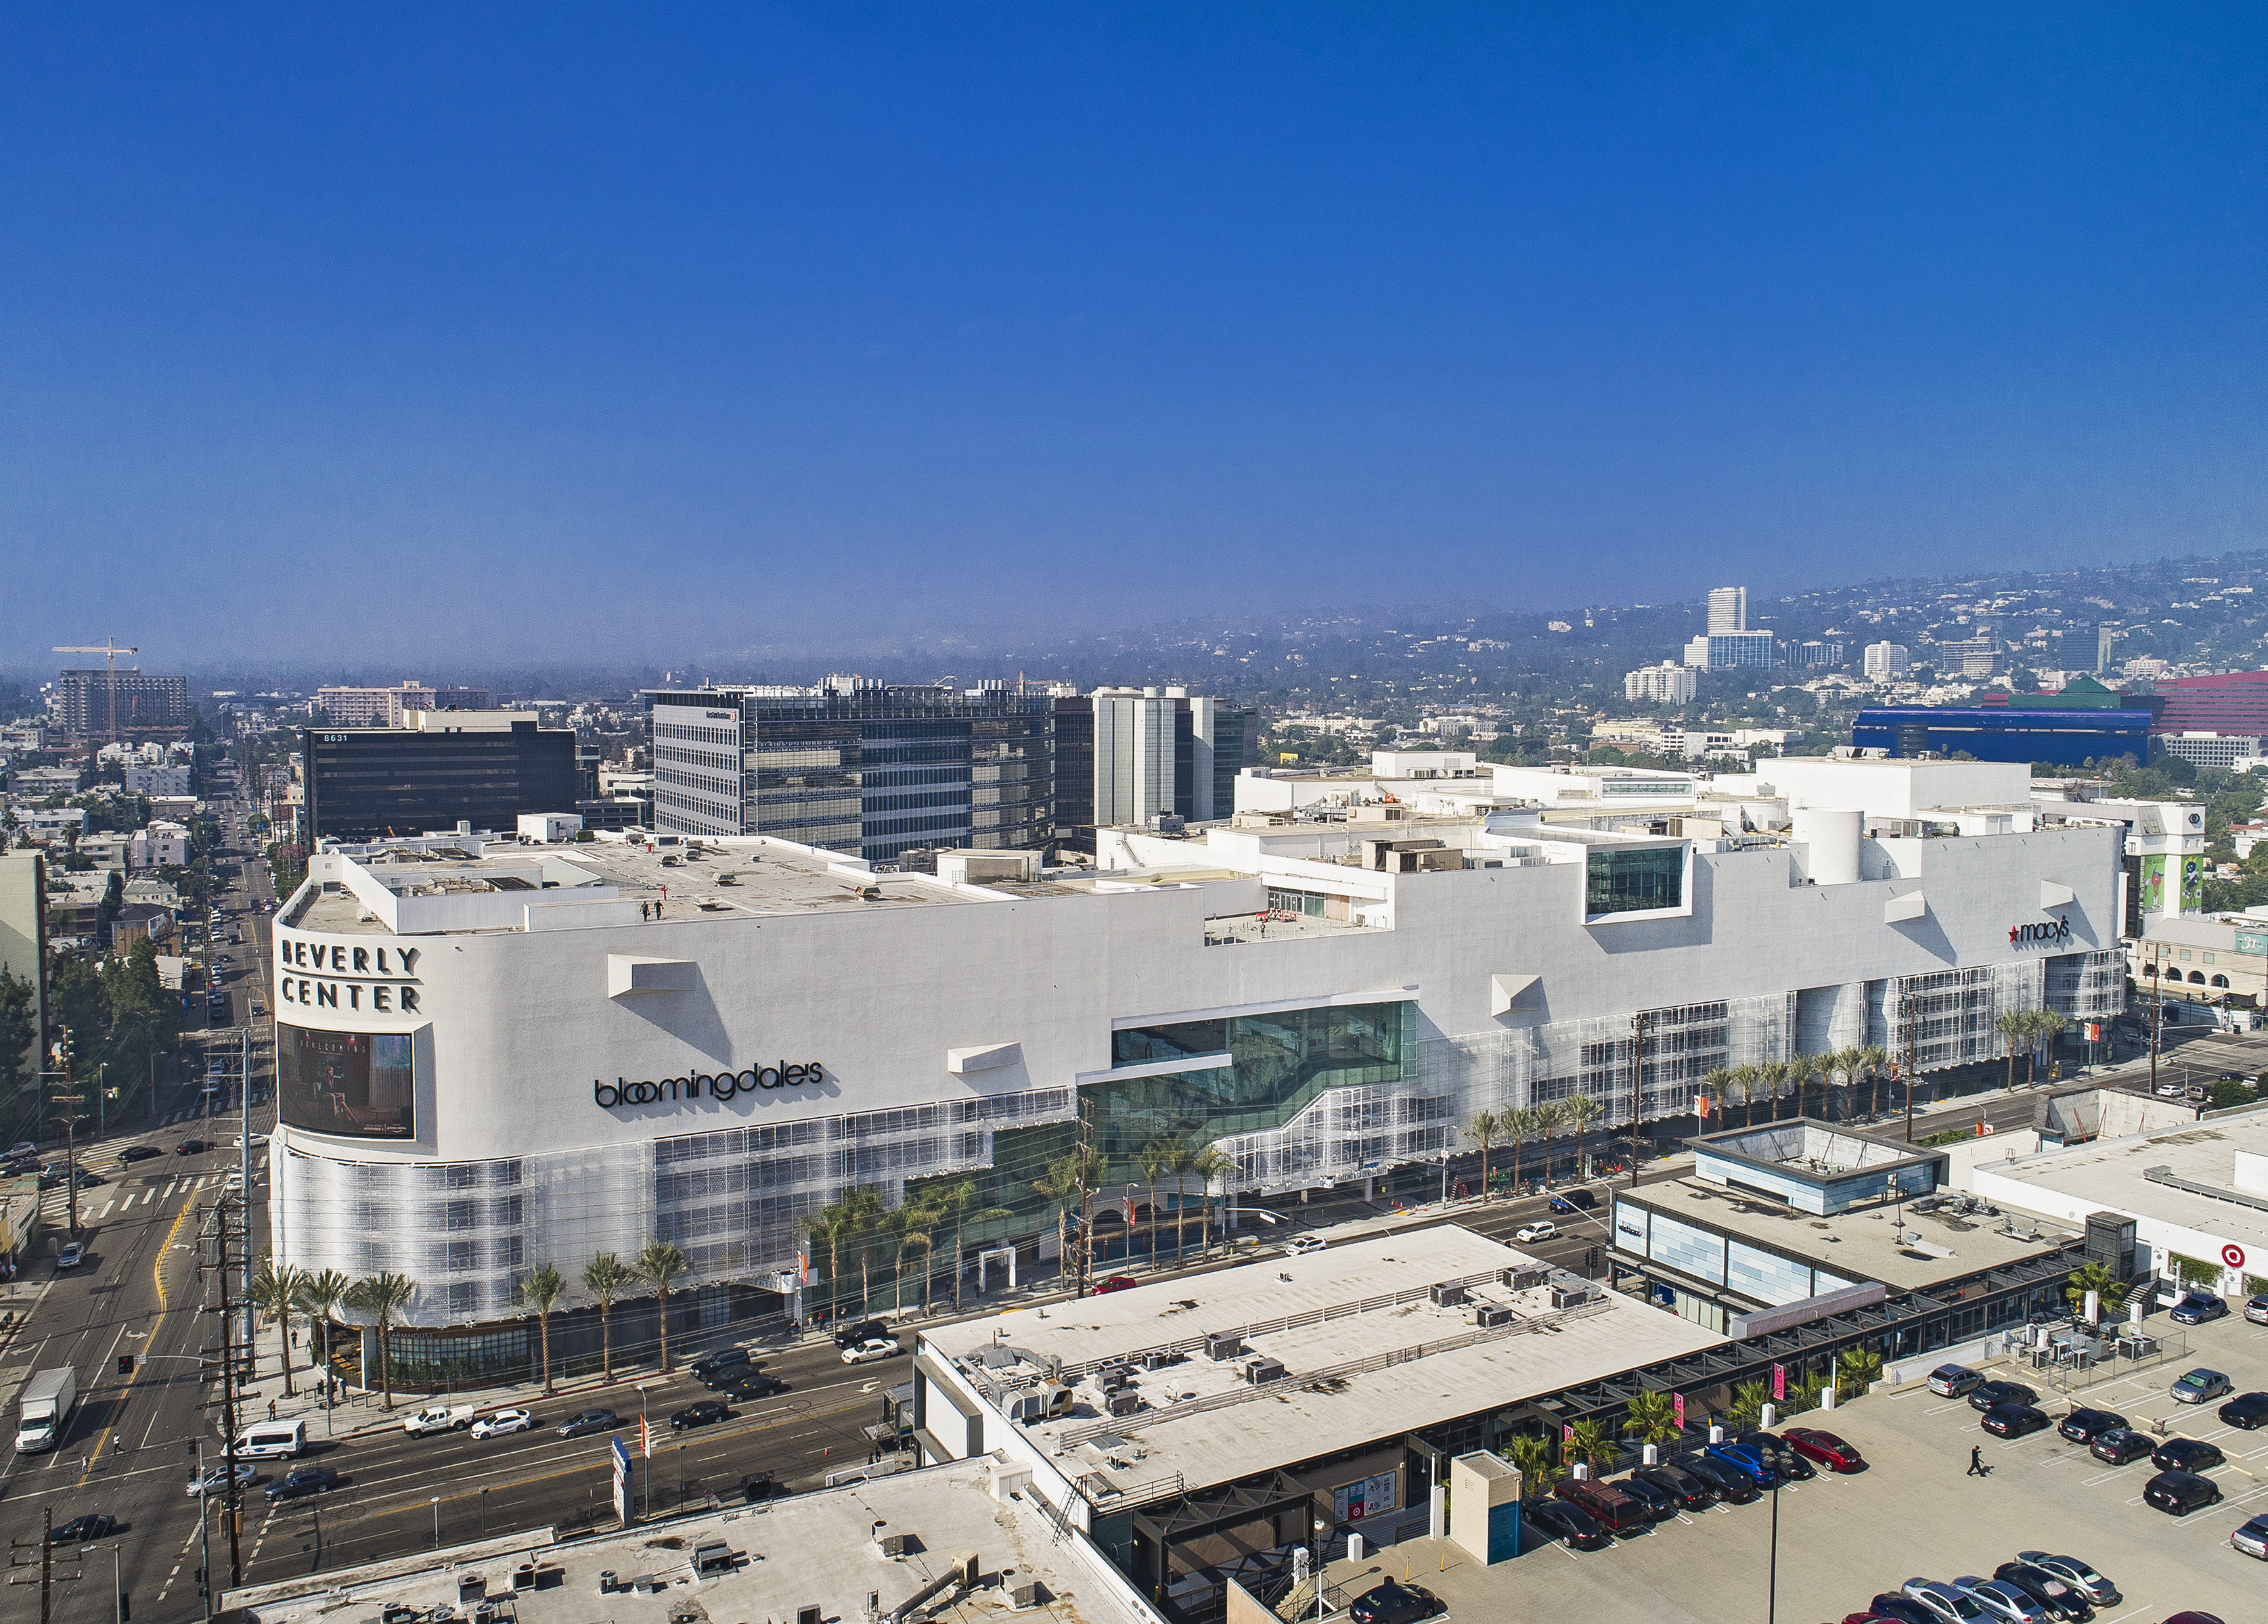 Studio Fuksas reworks Los Angeles's Beverly Center